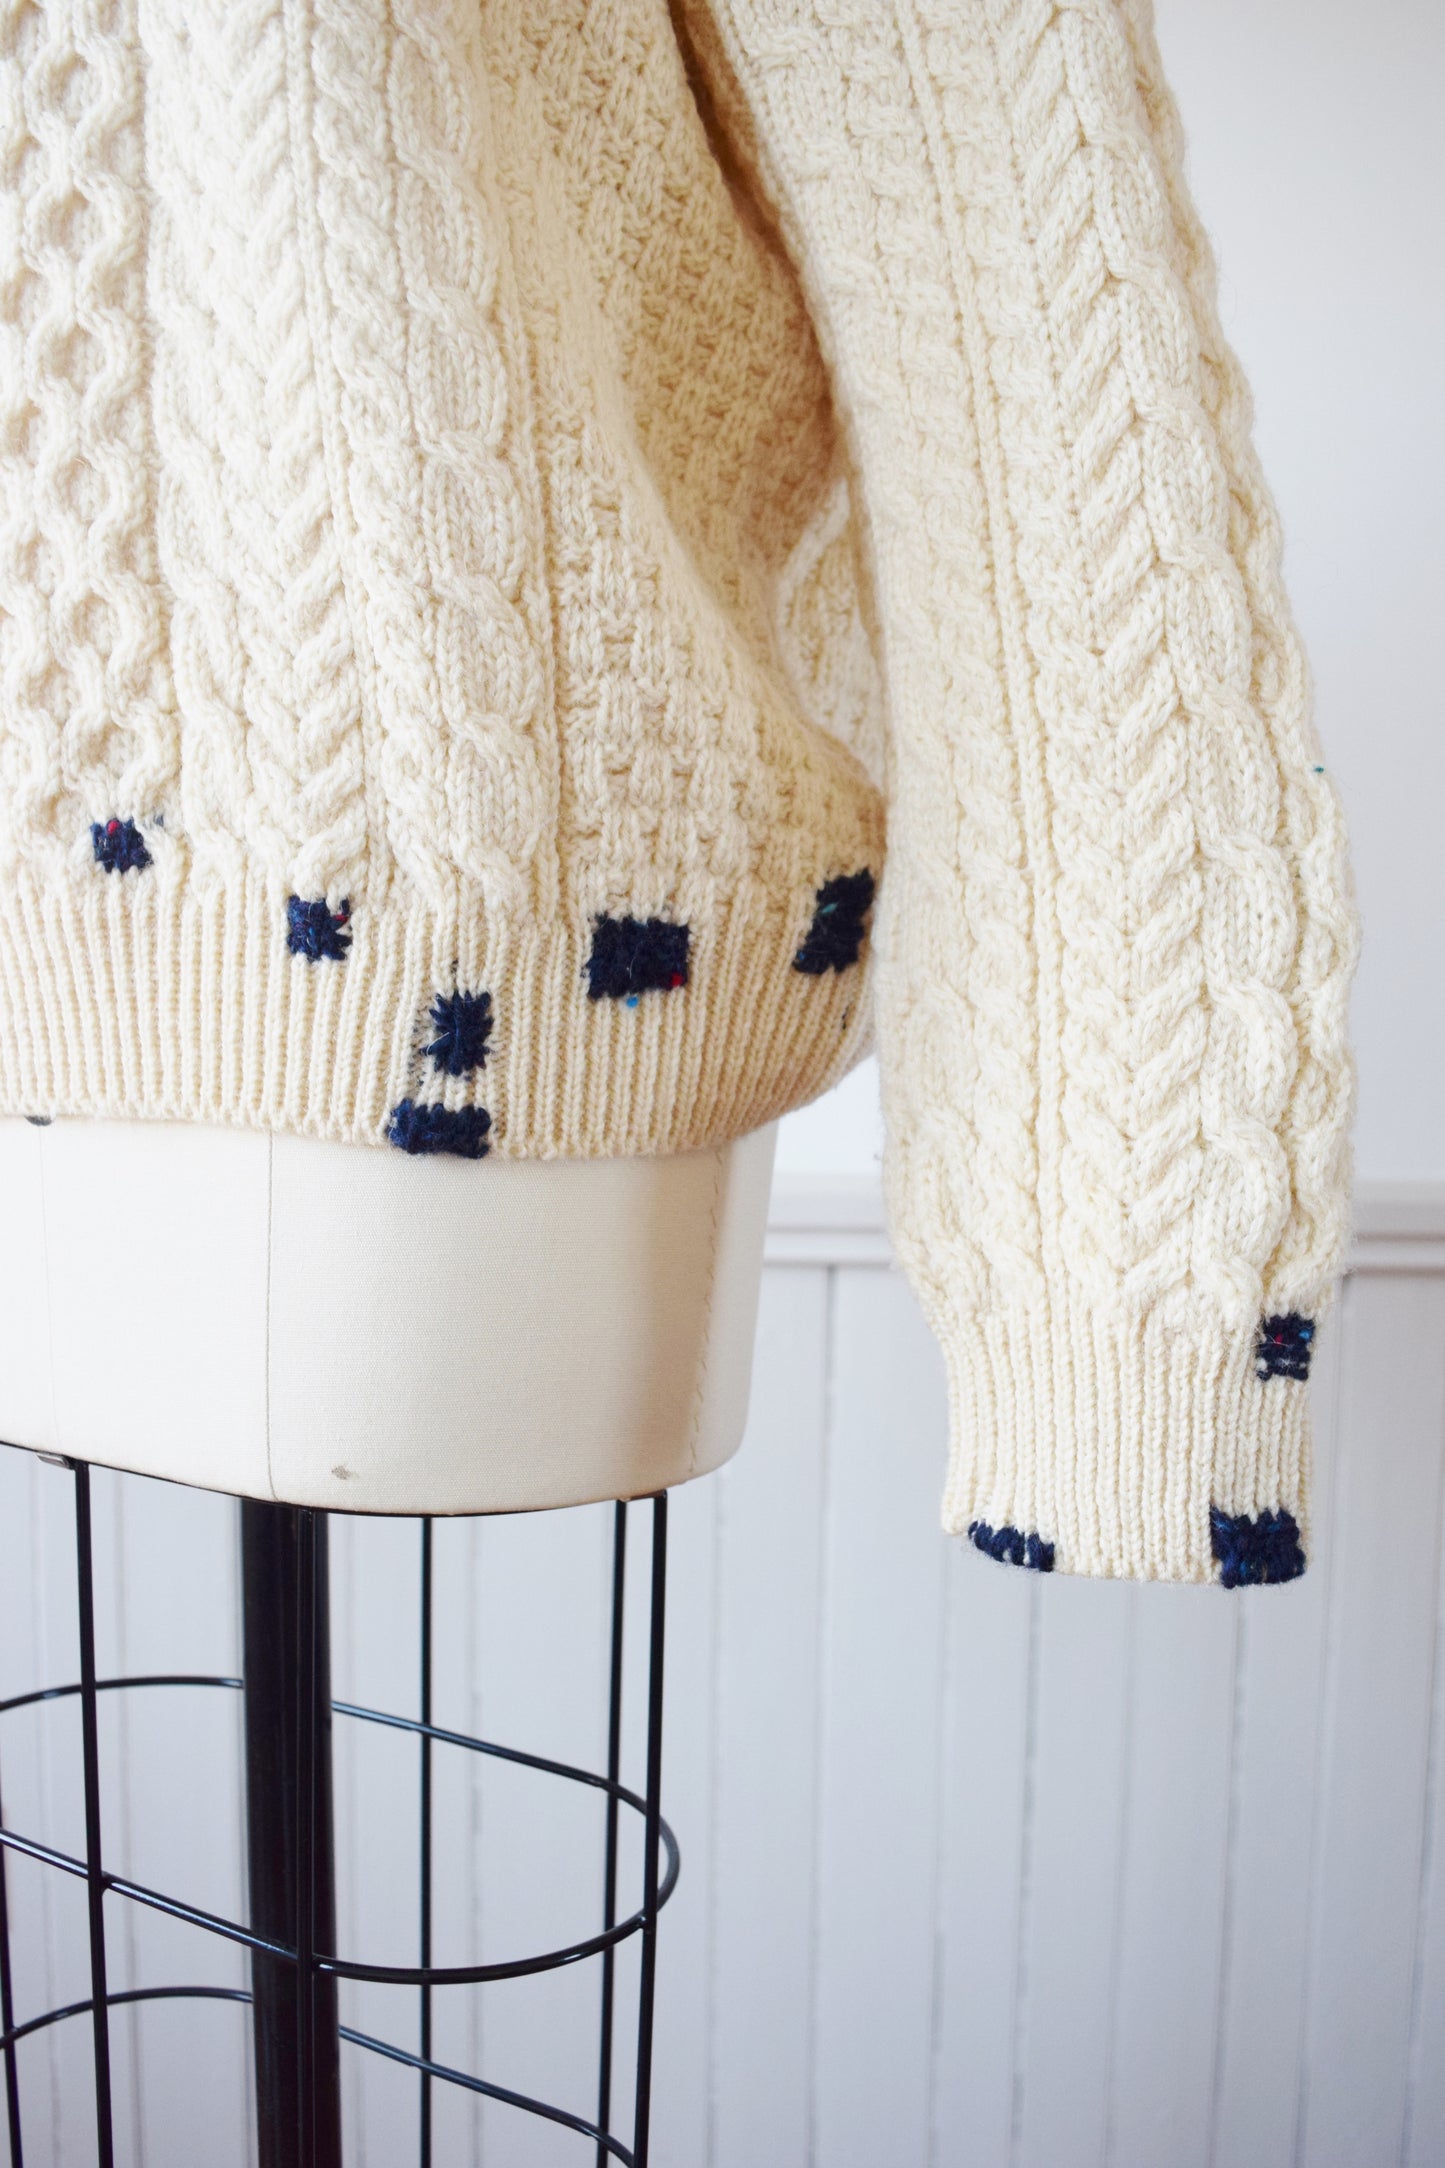 Make-Do Wool Sweater | Irish Cableknit with Custom Mends